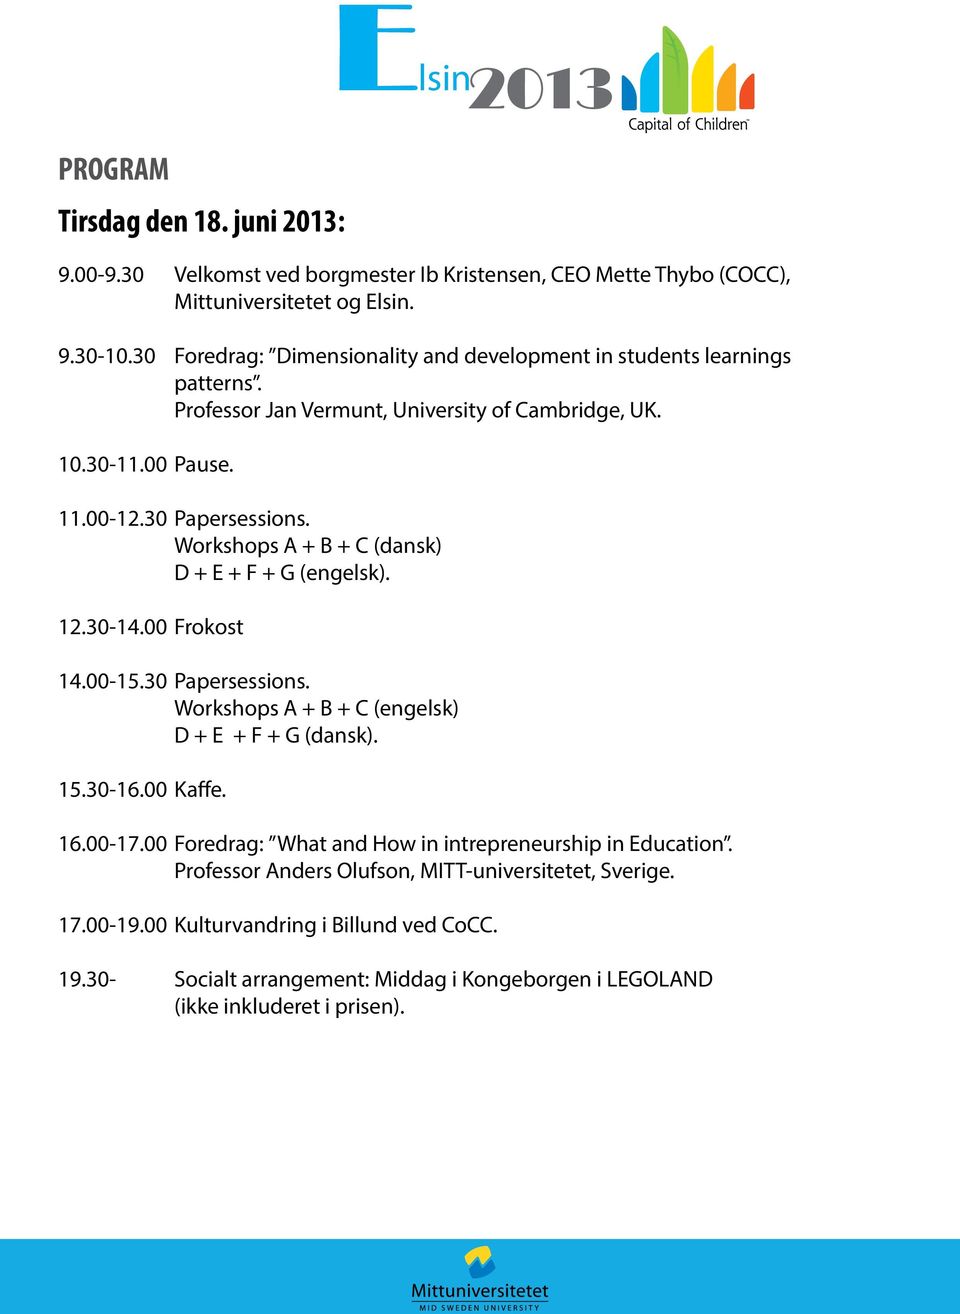 Workshops A + B + C (dansk) D + E + F + G (engelsk). 12.30-14.00 Frokost 14.00-15.30 Papersessions. Workshops A + B + C (engelsk) D + E + F + G (dansk). 15.30-16.00 Kaffe. 16.00-17.